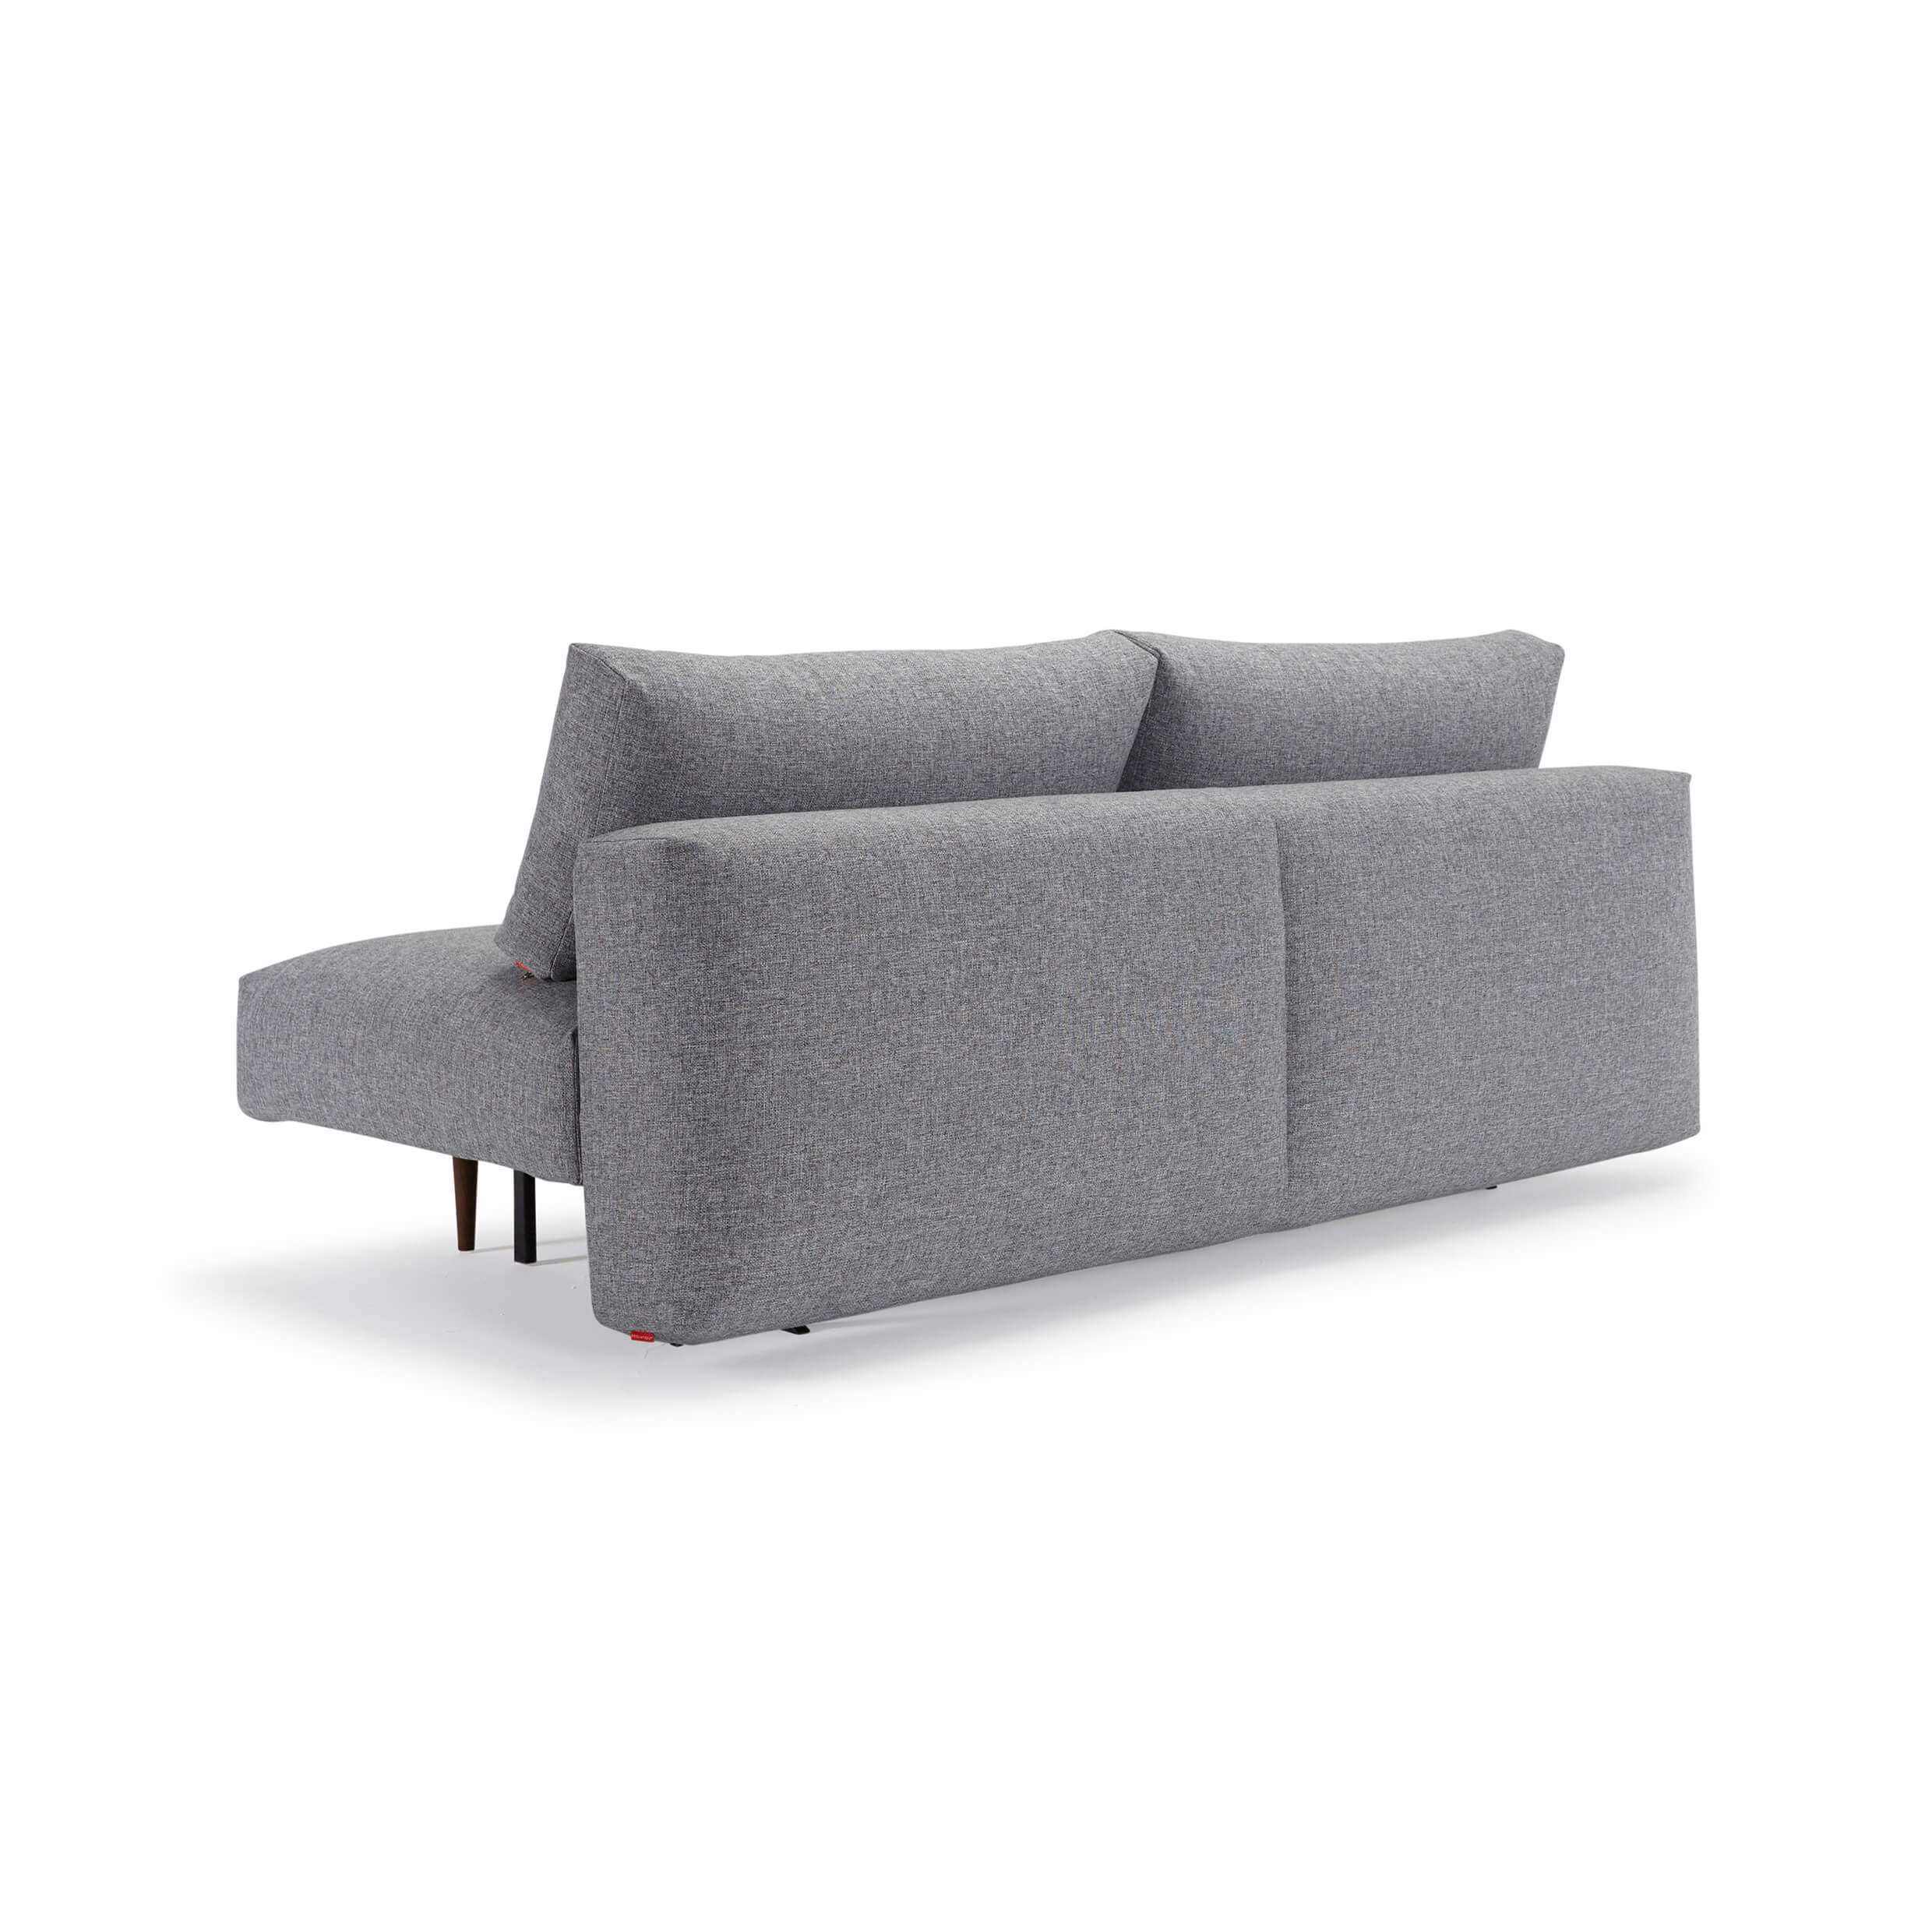 Convertible sleeper sofa rear view